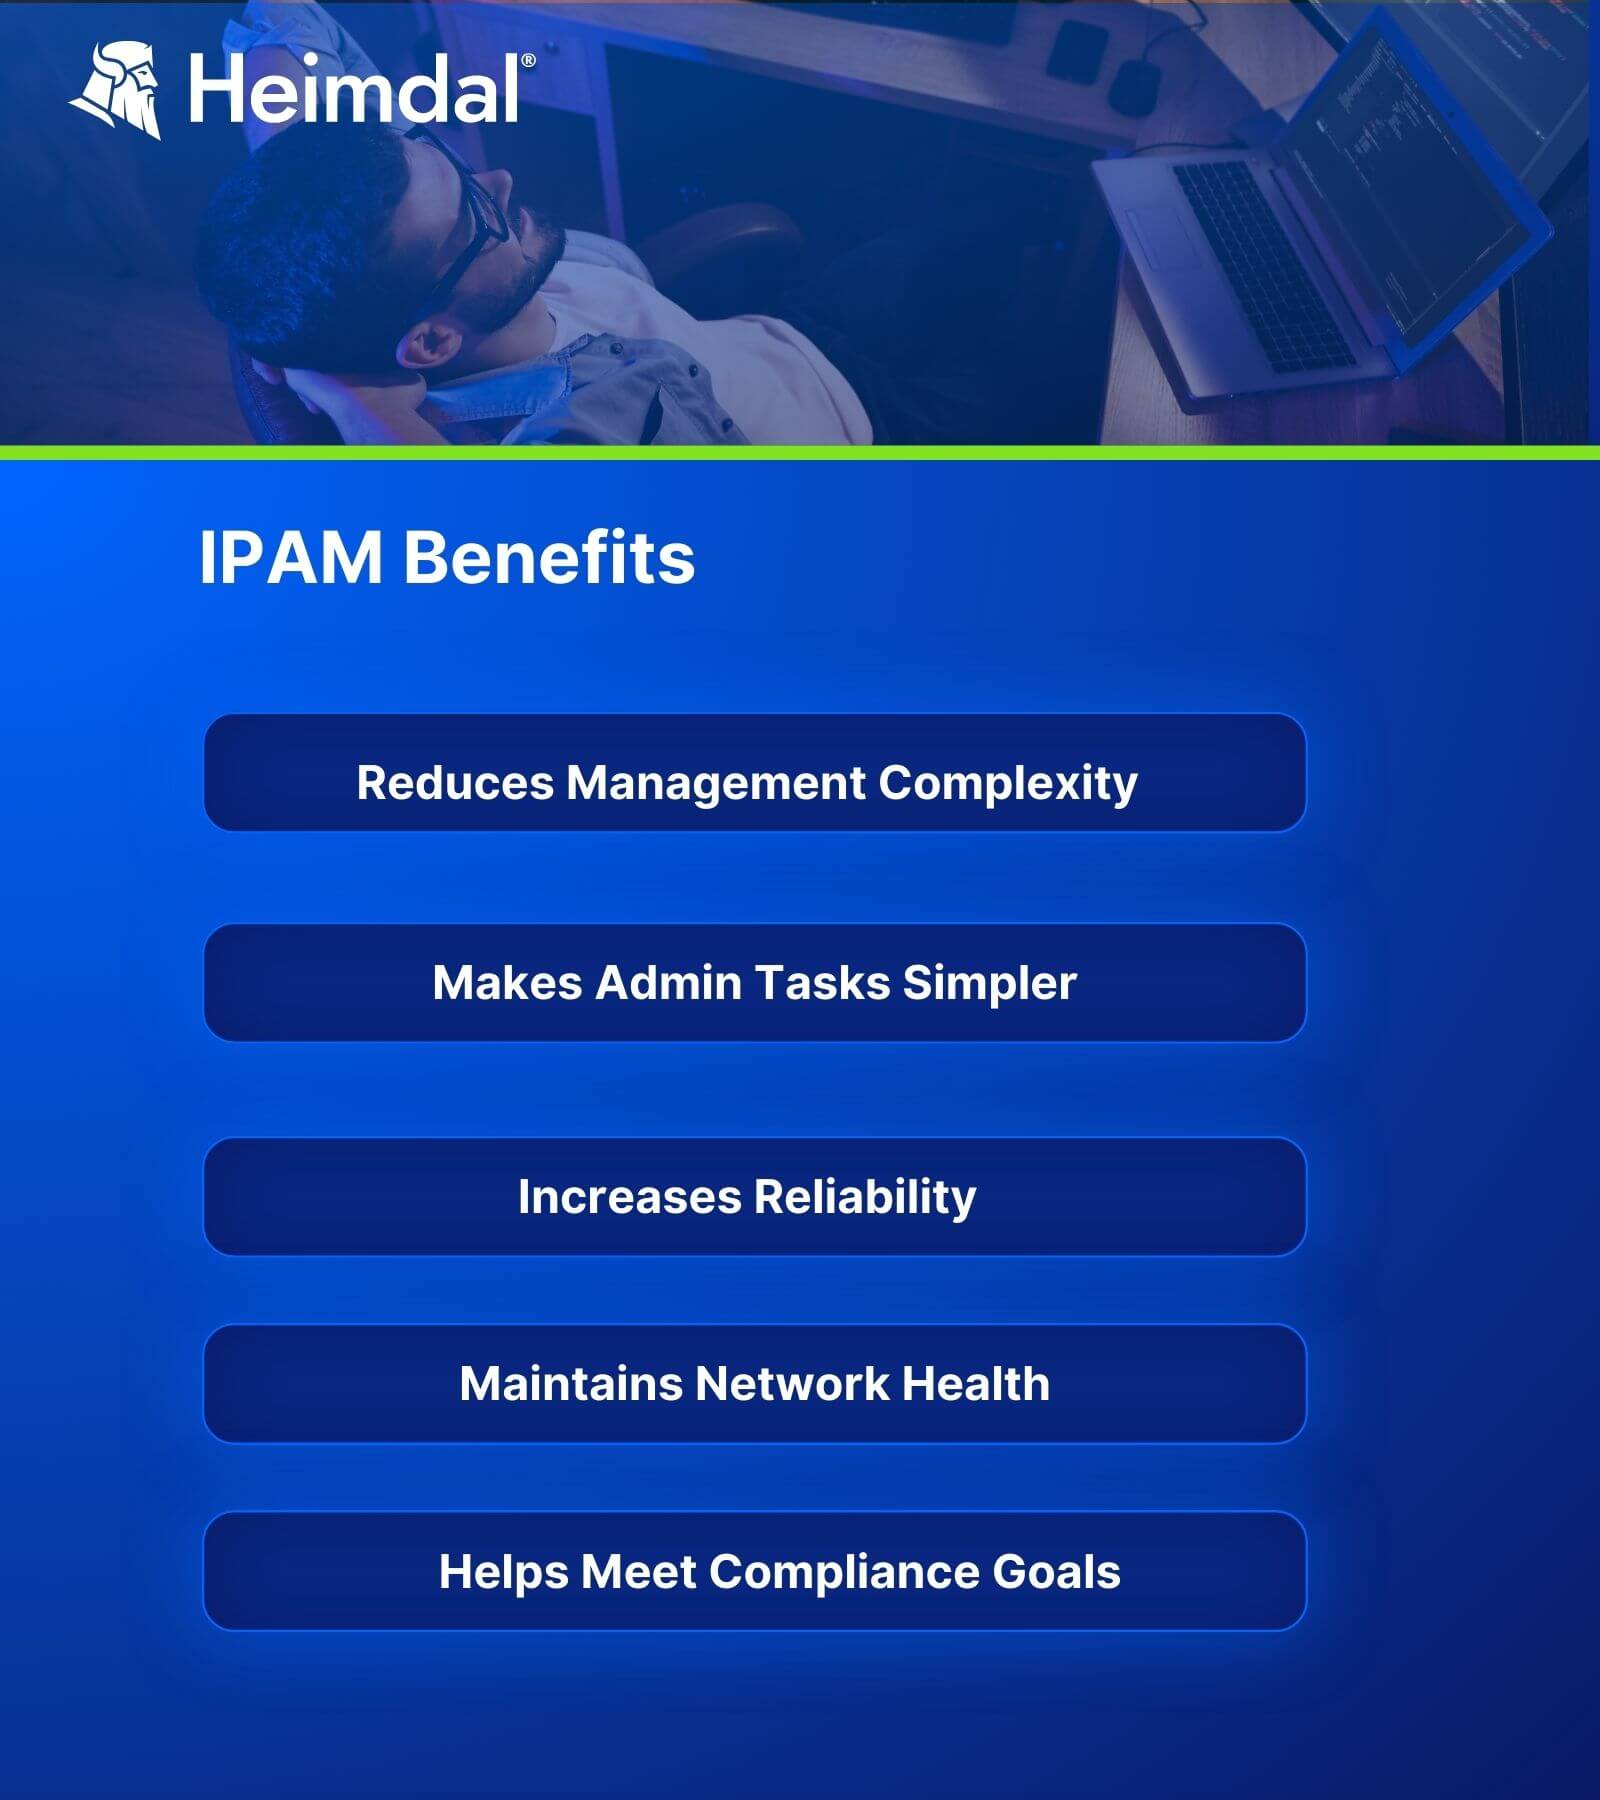 IPAM benefits